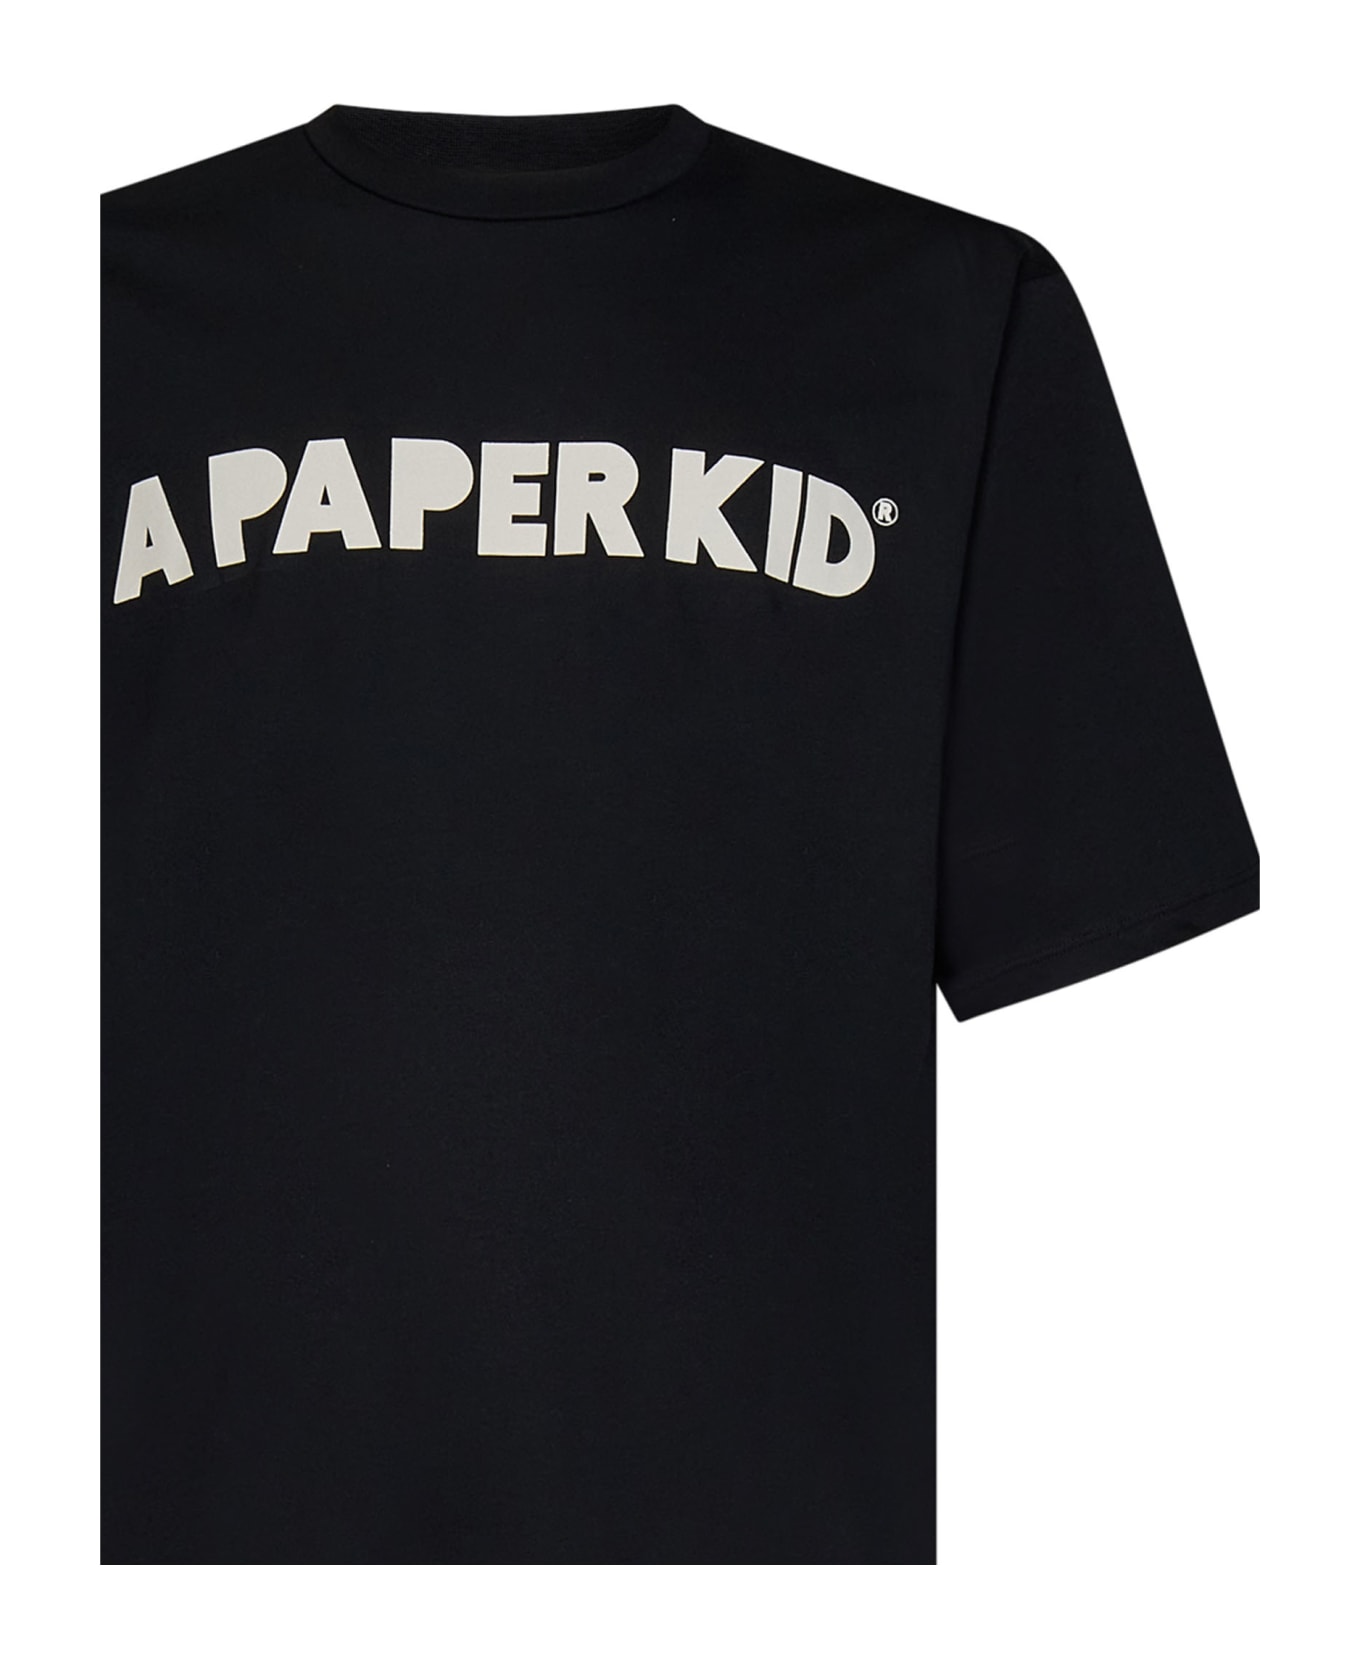 A Paper Kid T-shirt - Nero